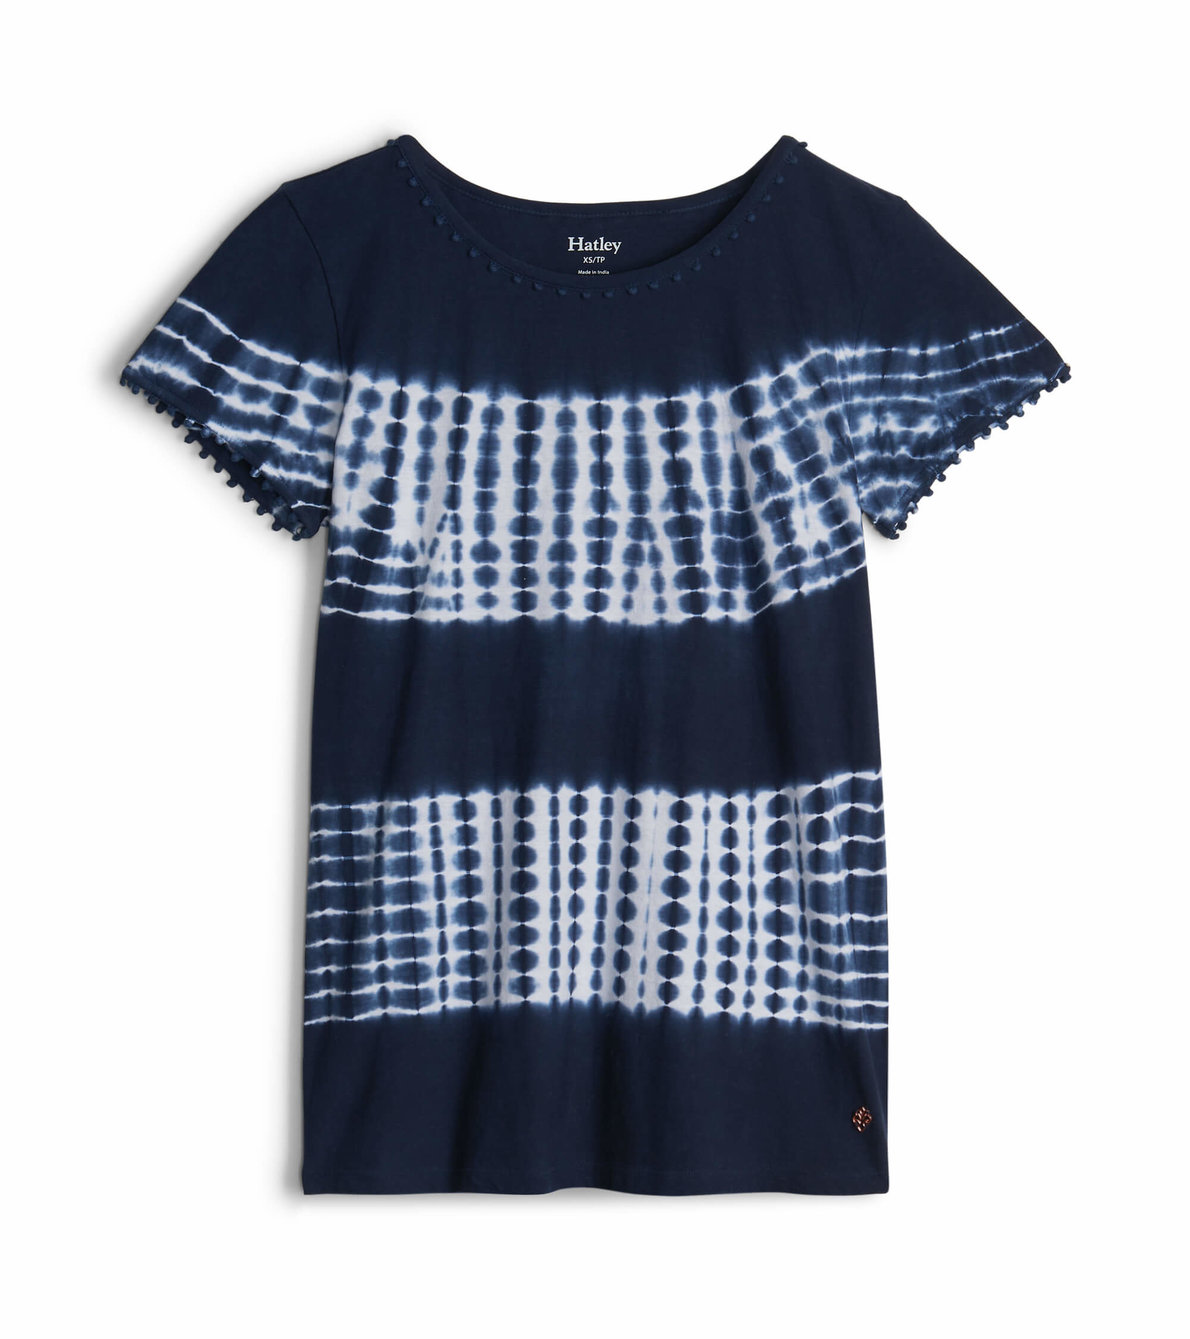 Agrandir l'image de T-shirt Emma – Bord de mer teint par immersion